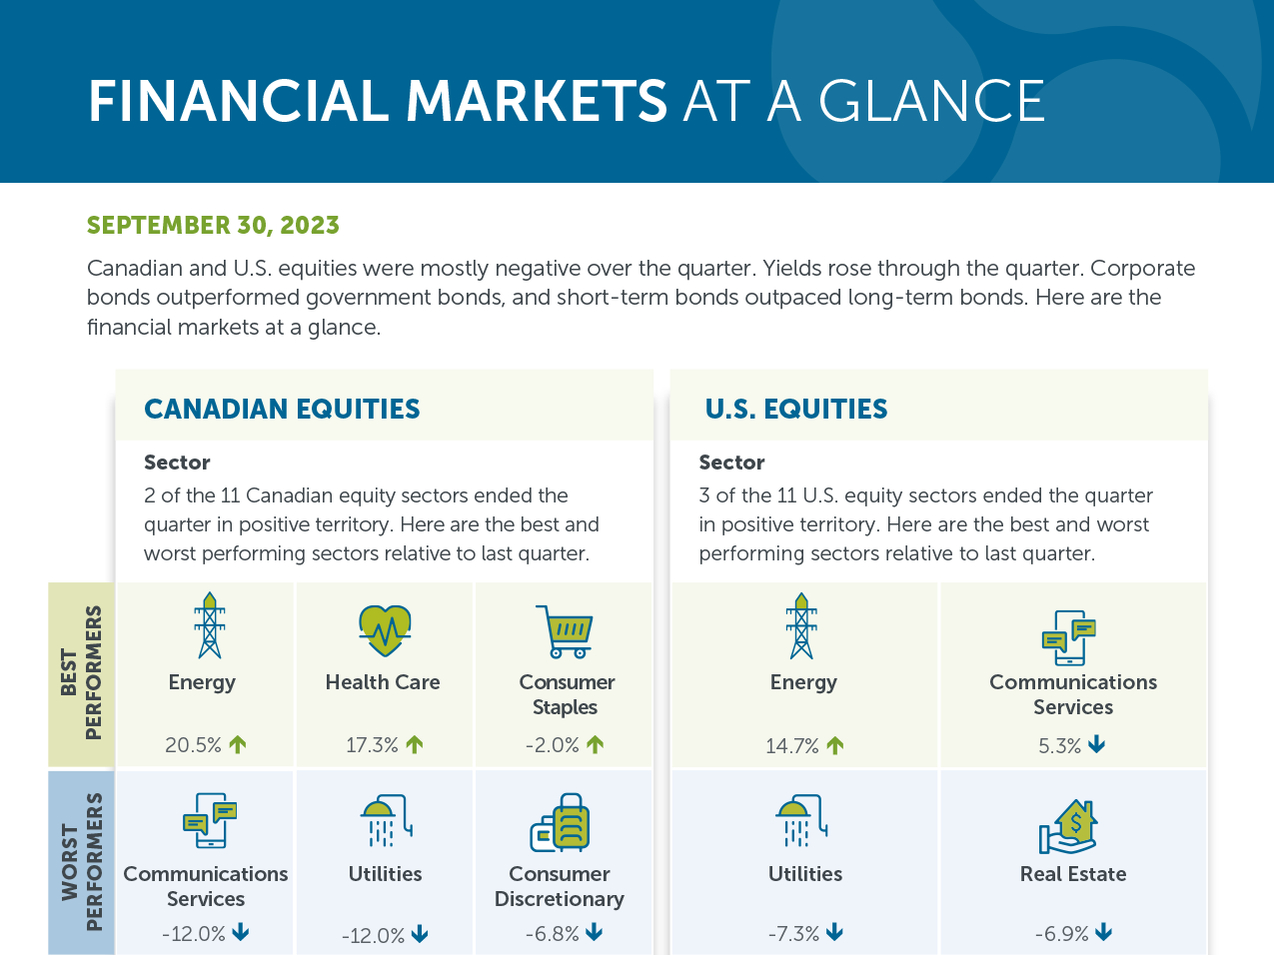 Financial markets at a glance - December 31, 2023